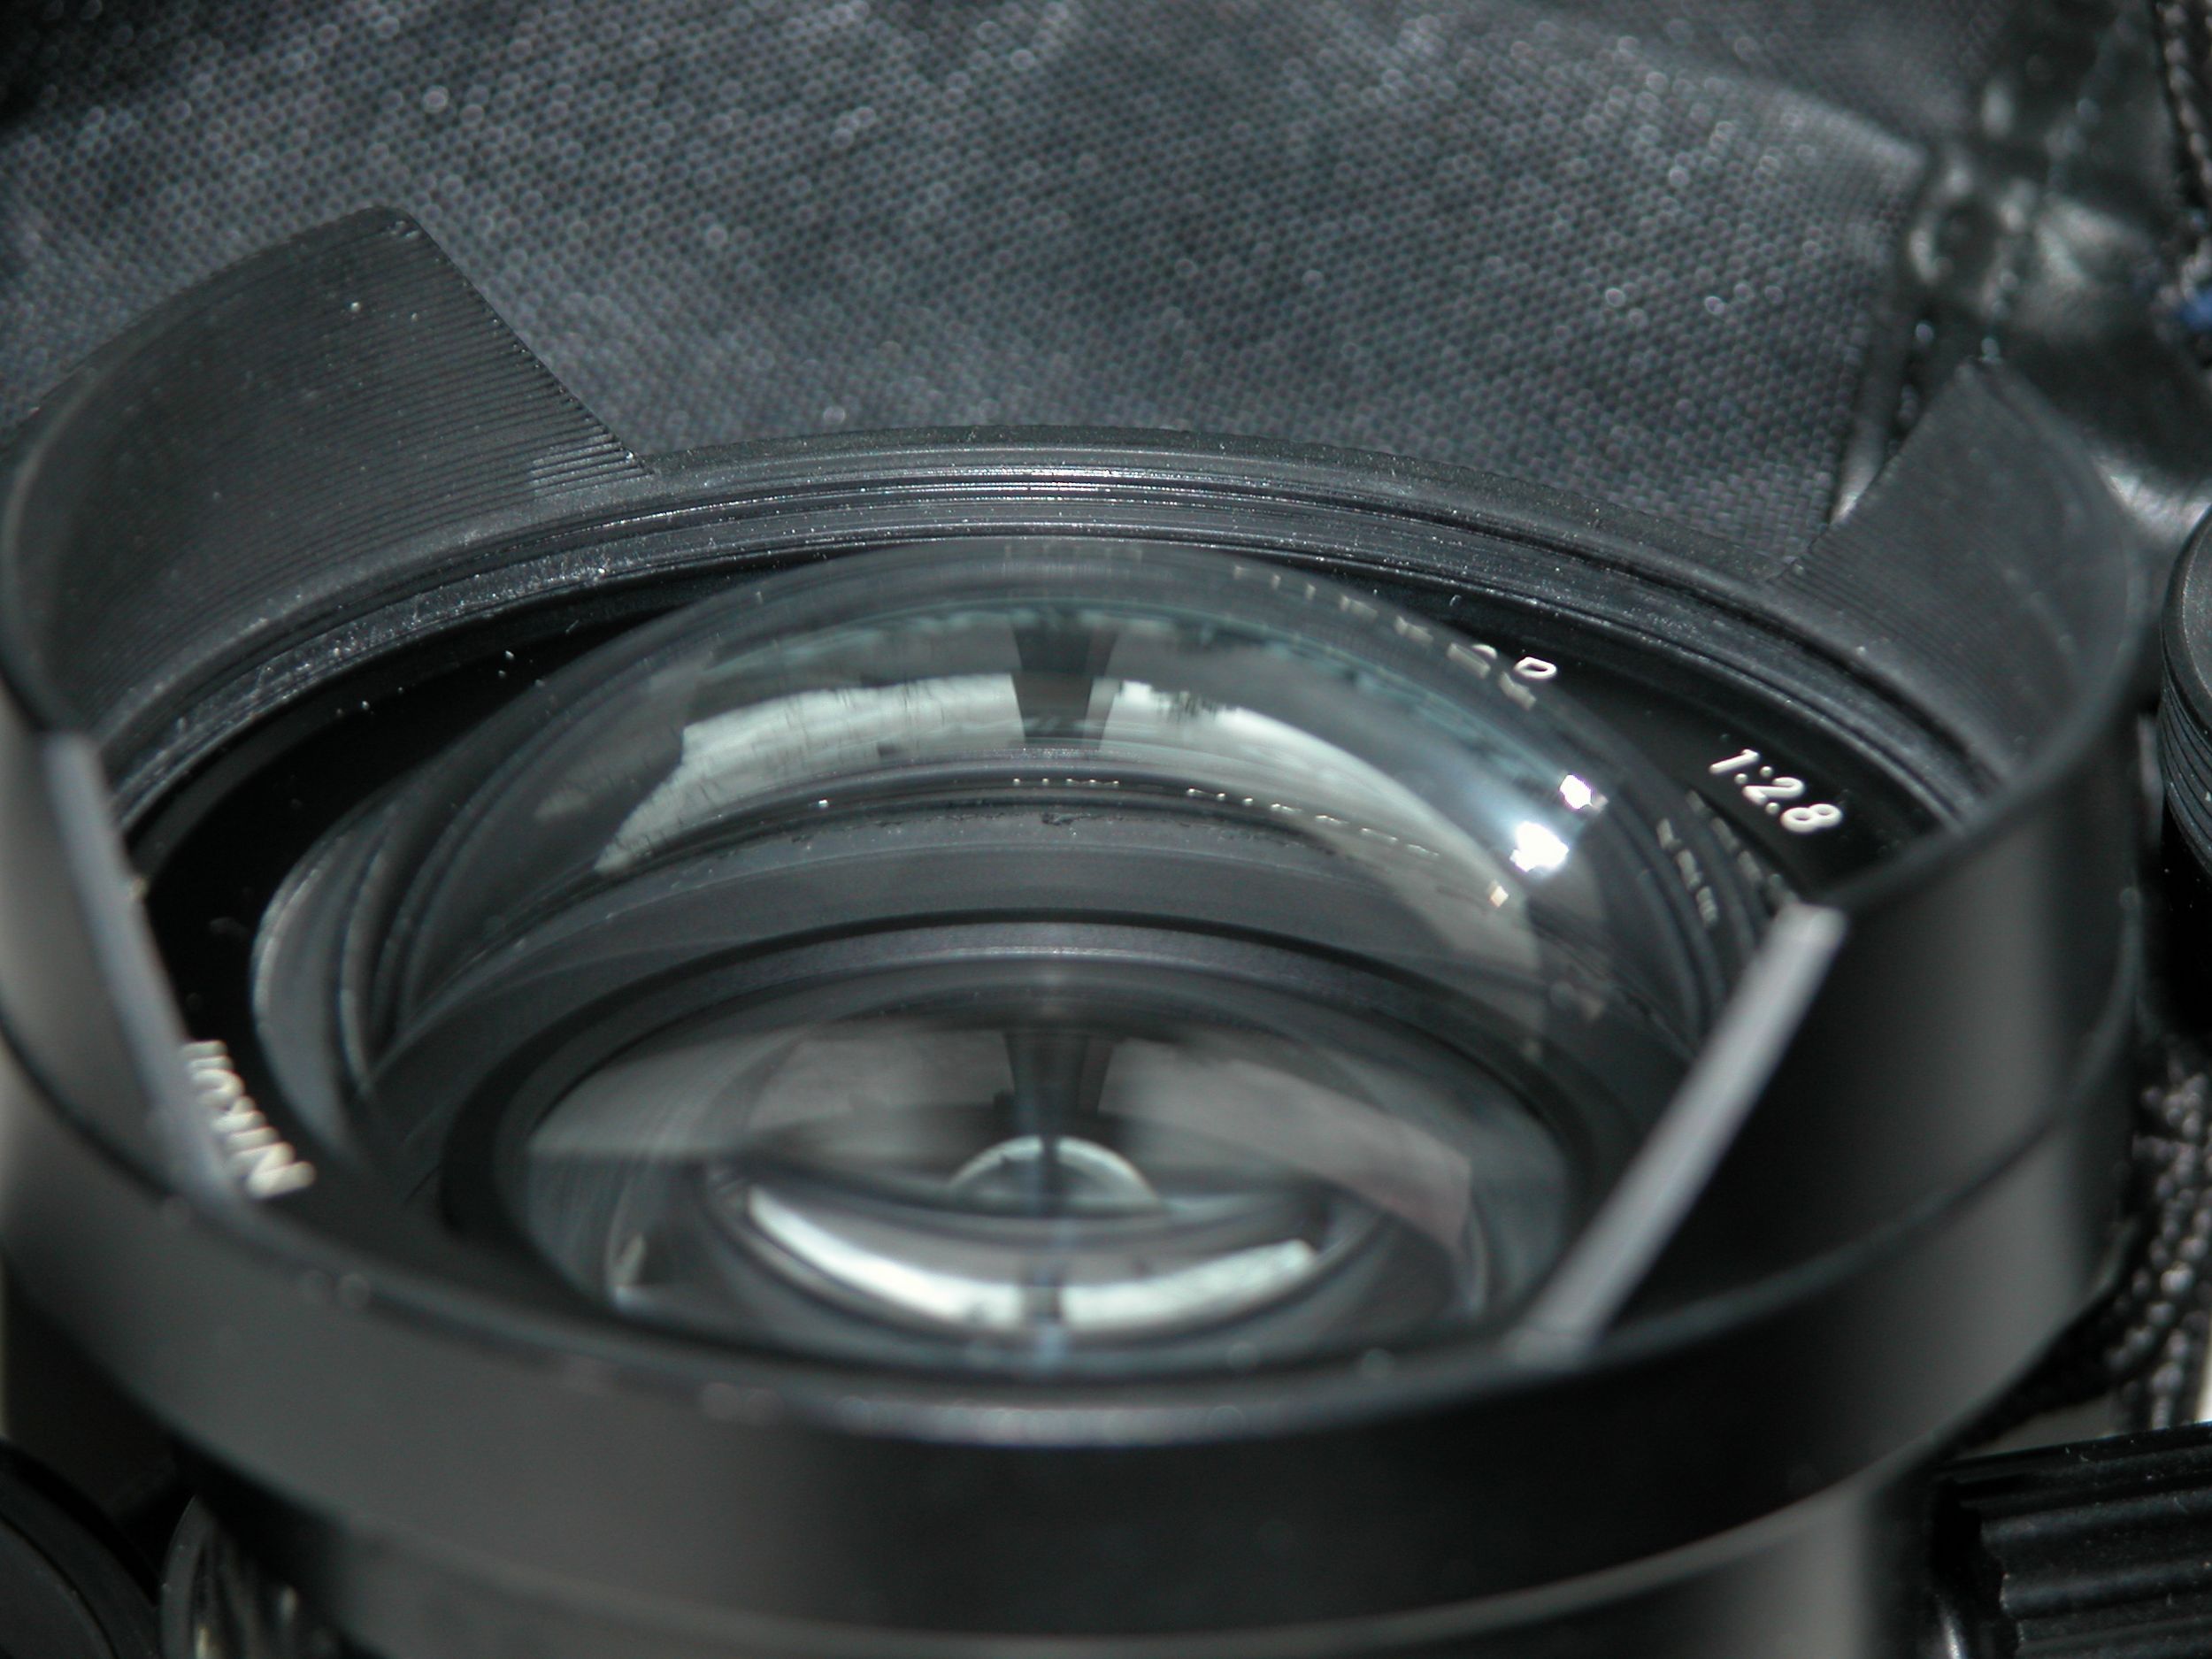 15mm lens Nikonos